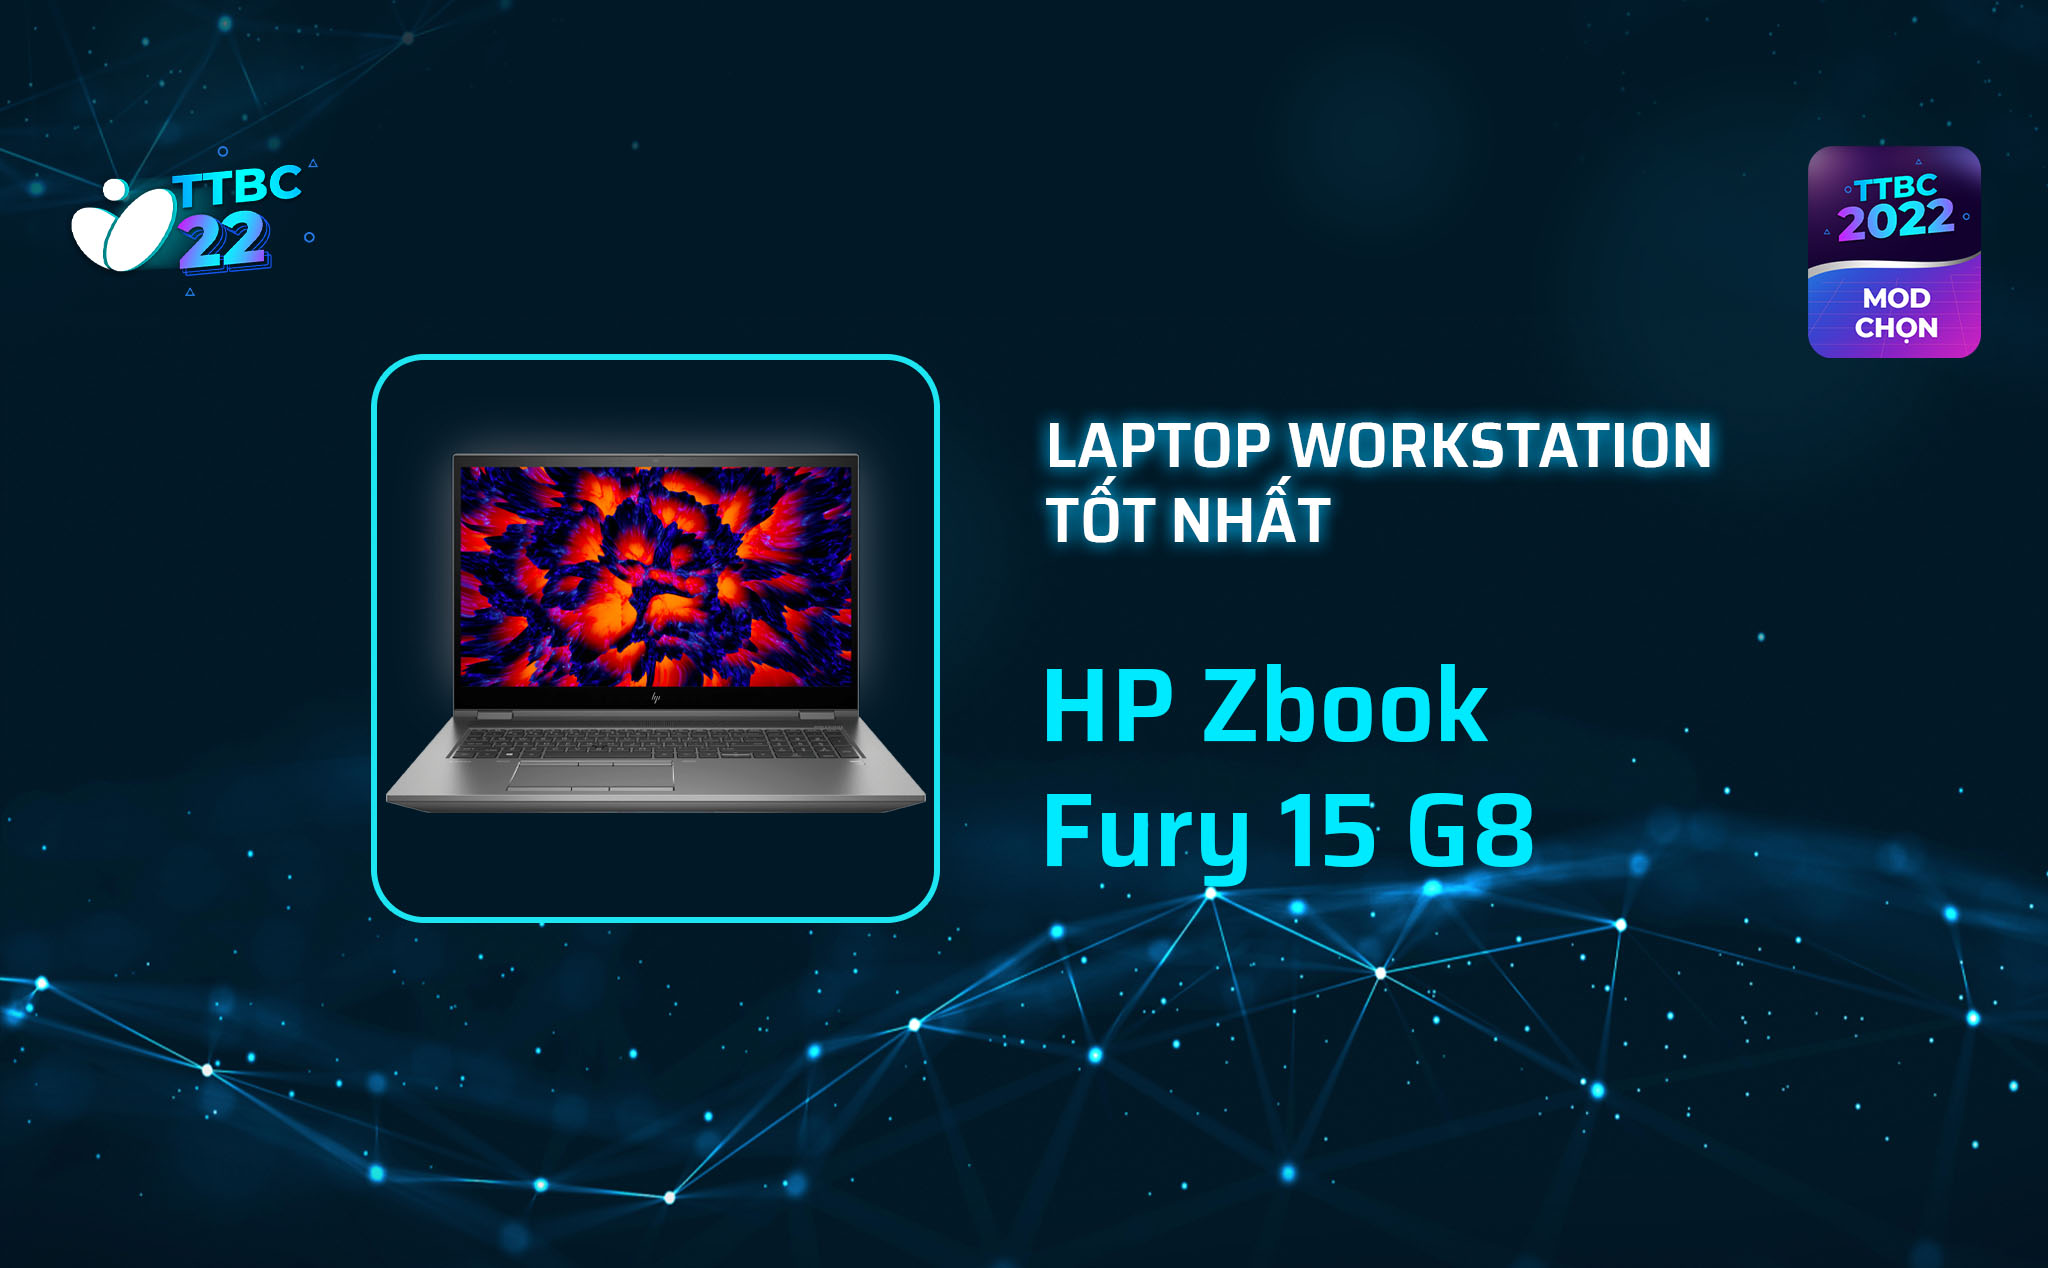 #TTBC22 - Mod choice - laptop Workstation tốt nhất - HP ZBook Fury 15 G8